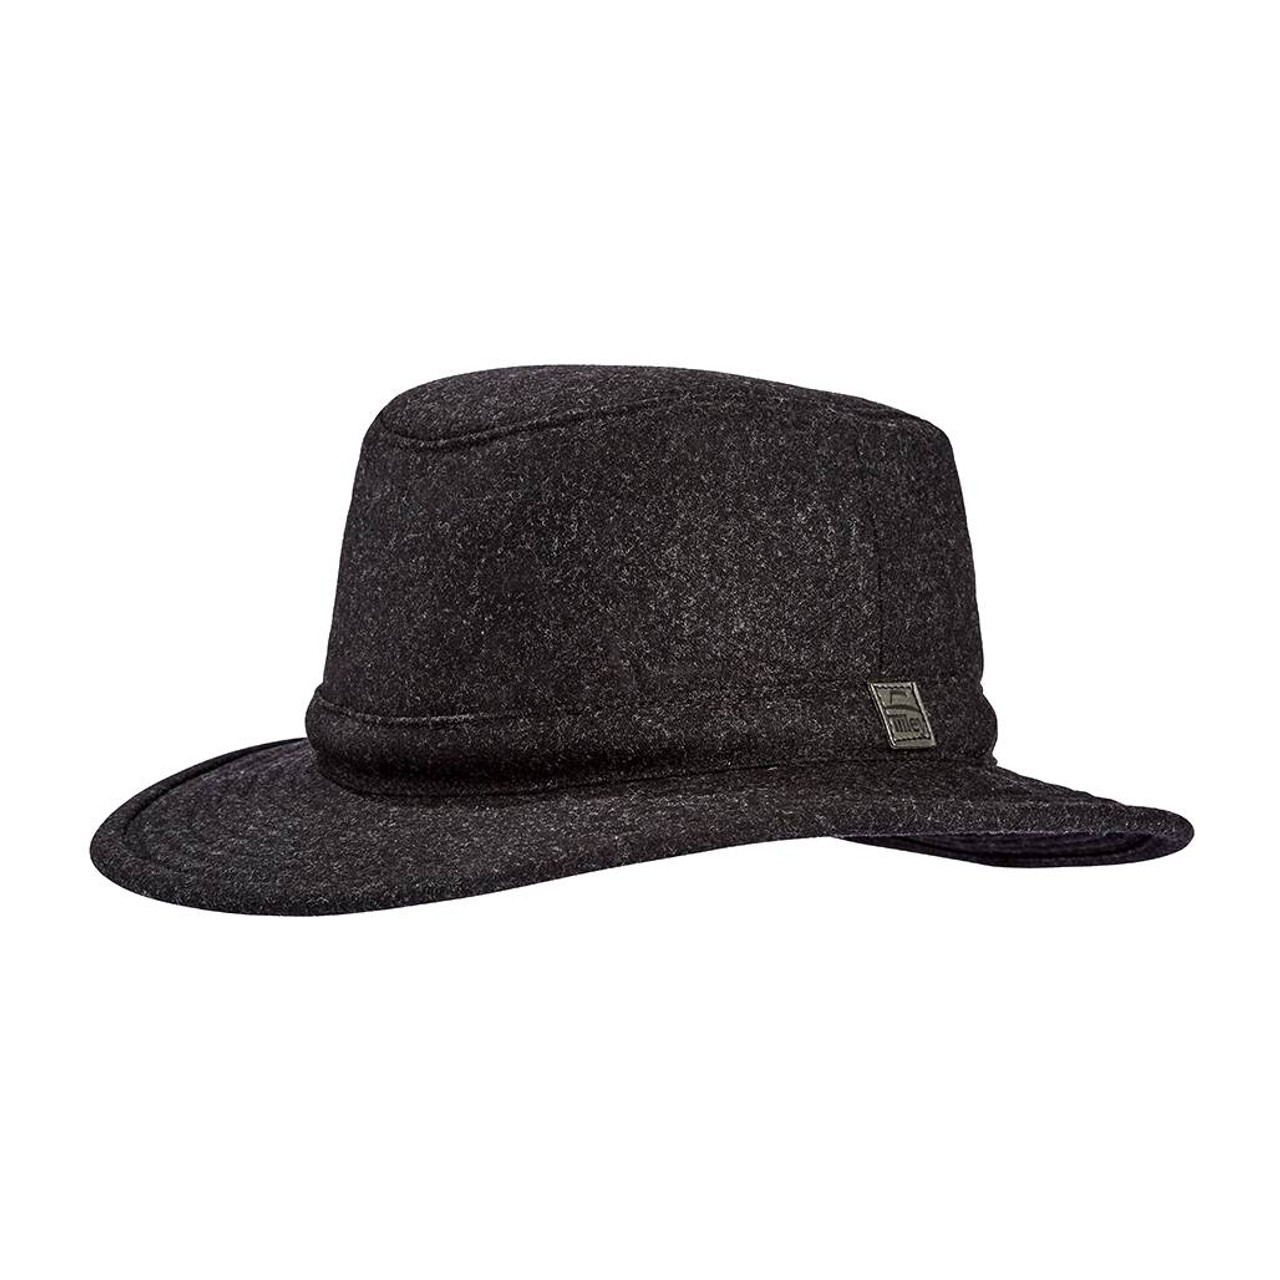 Ttw2 Black Tec Wool Hat